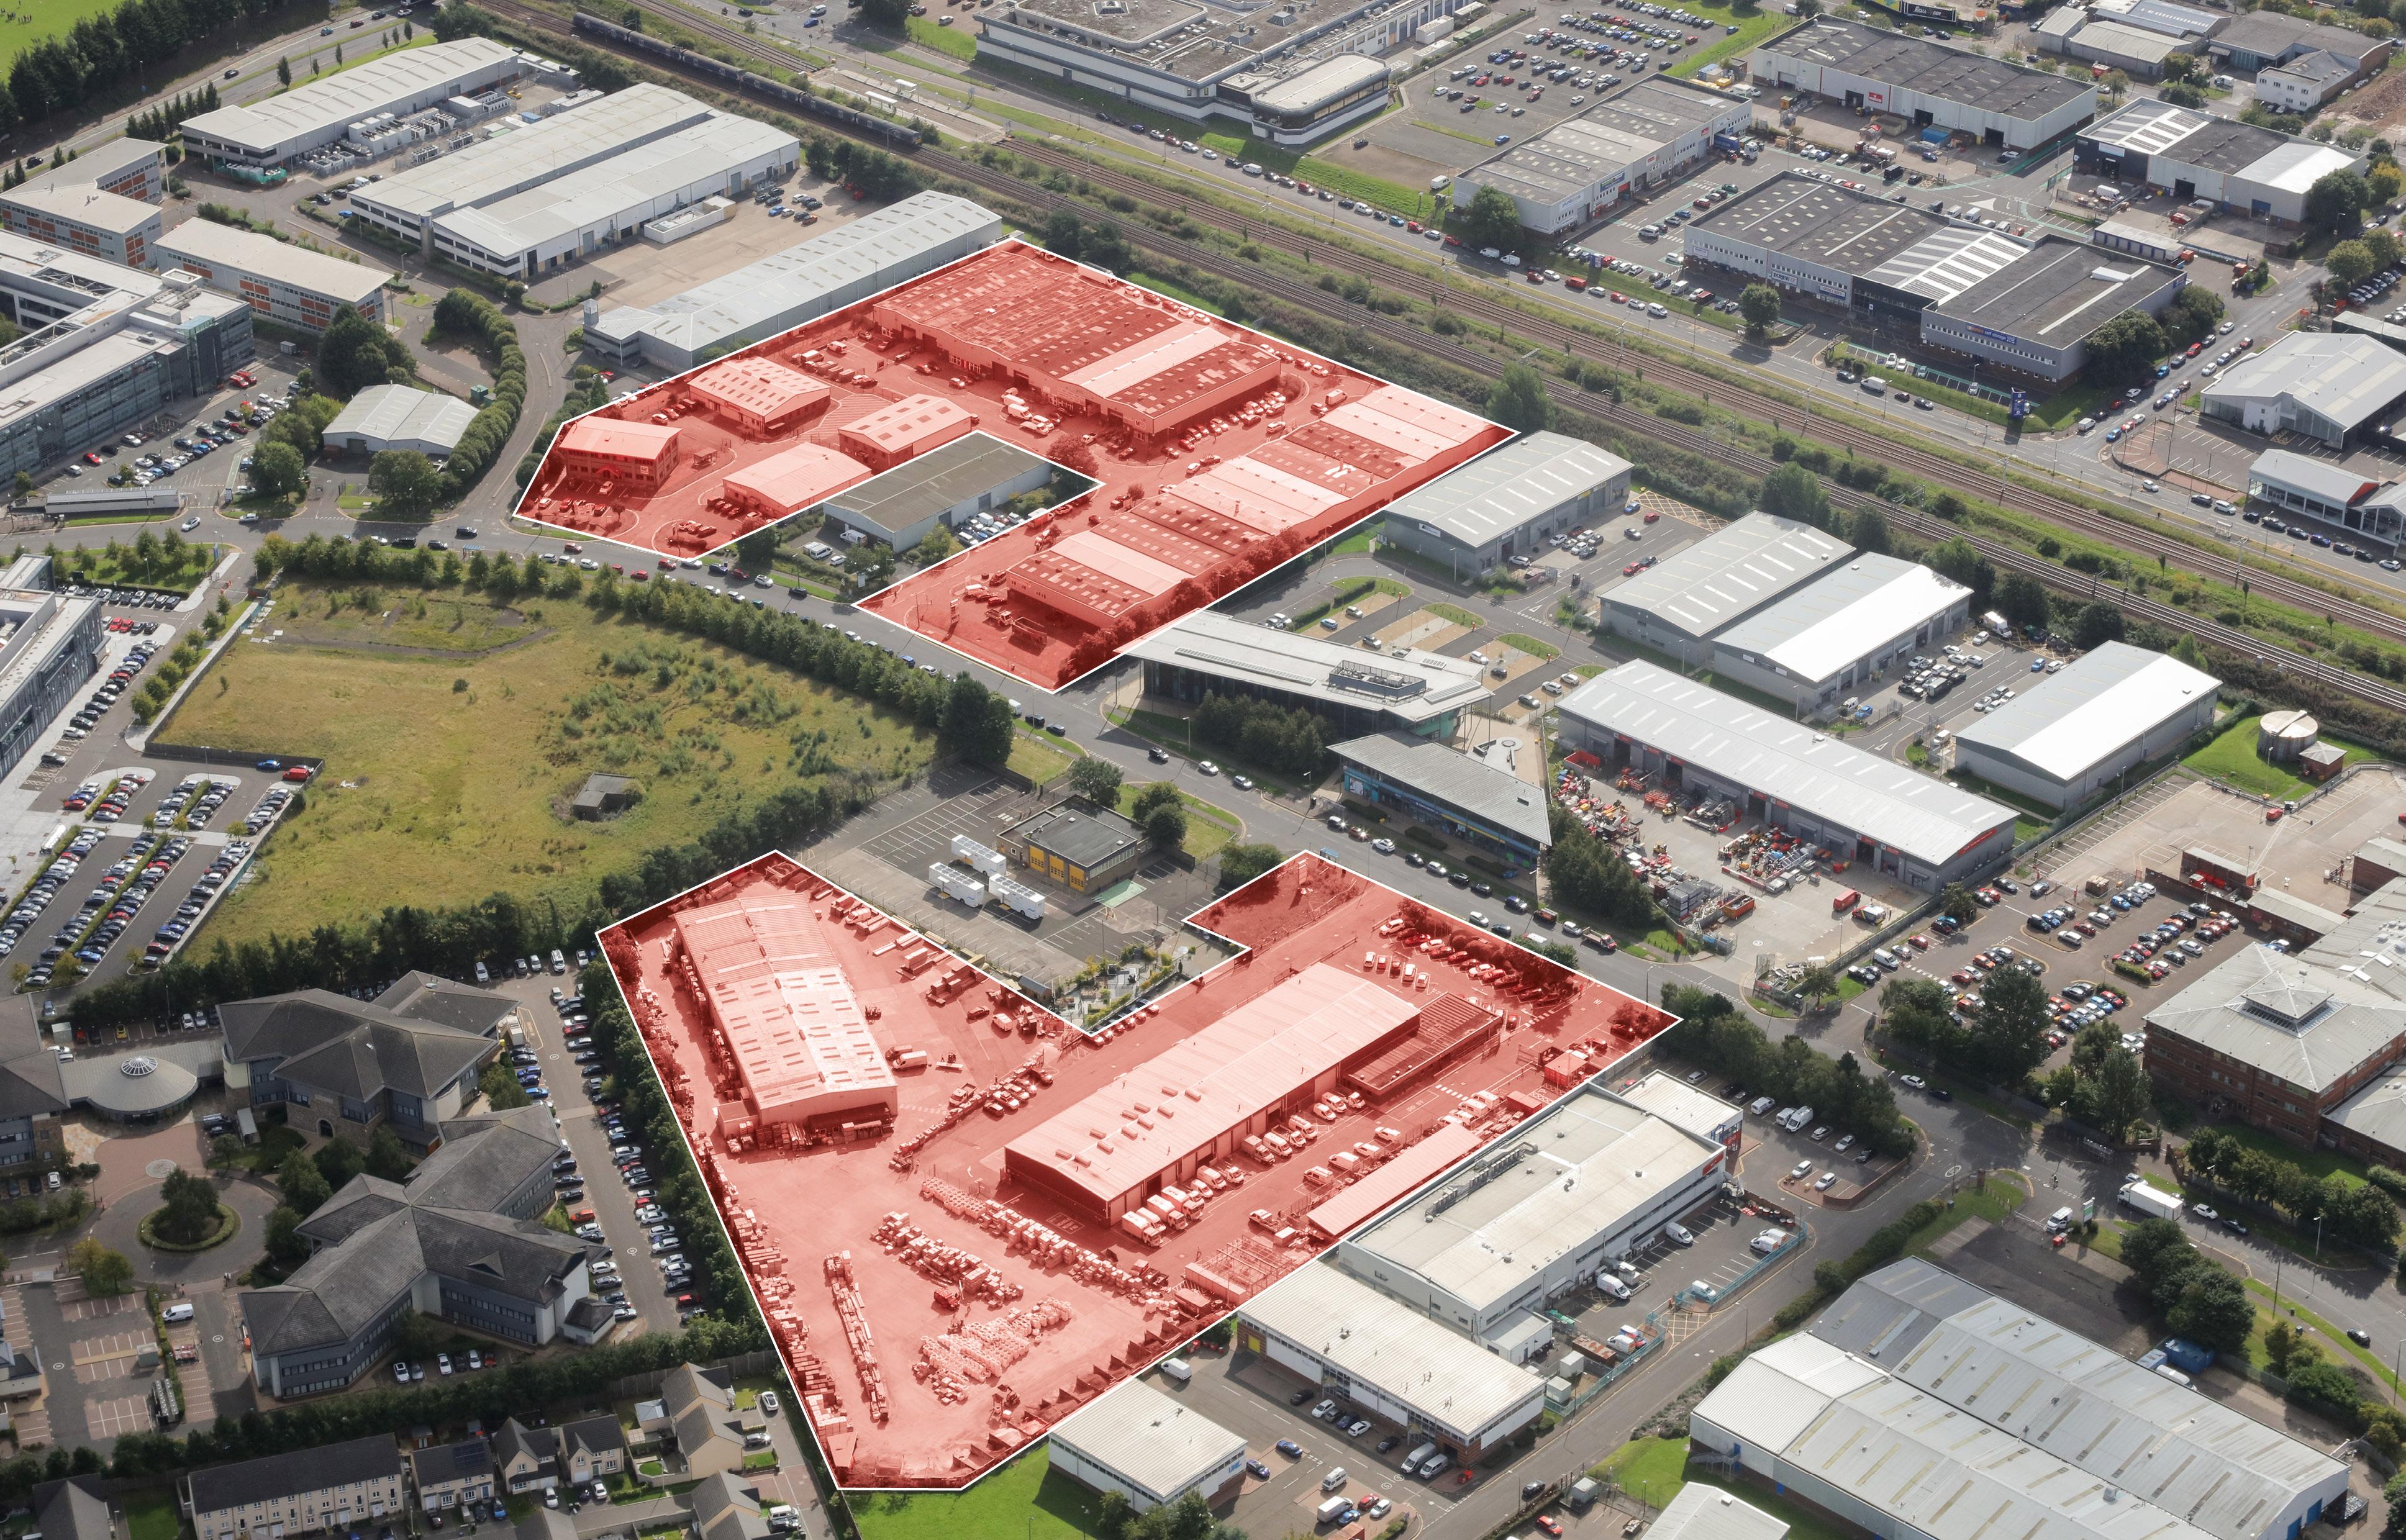 An aerial photograph of the South Gyle Trade Park in Edinburgh.